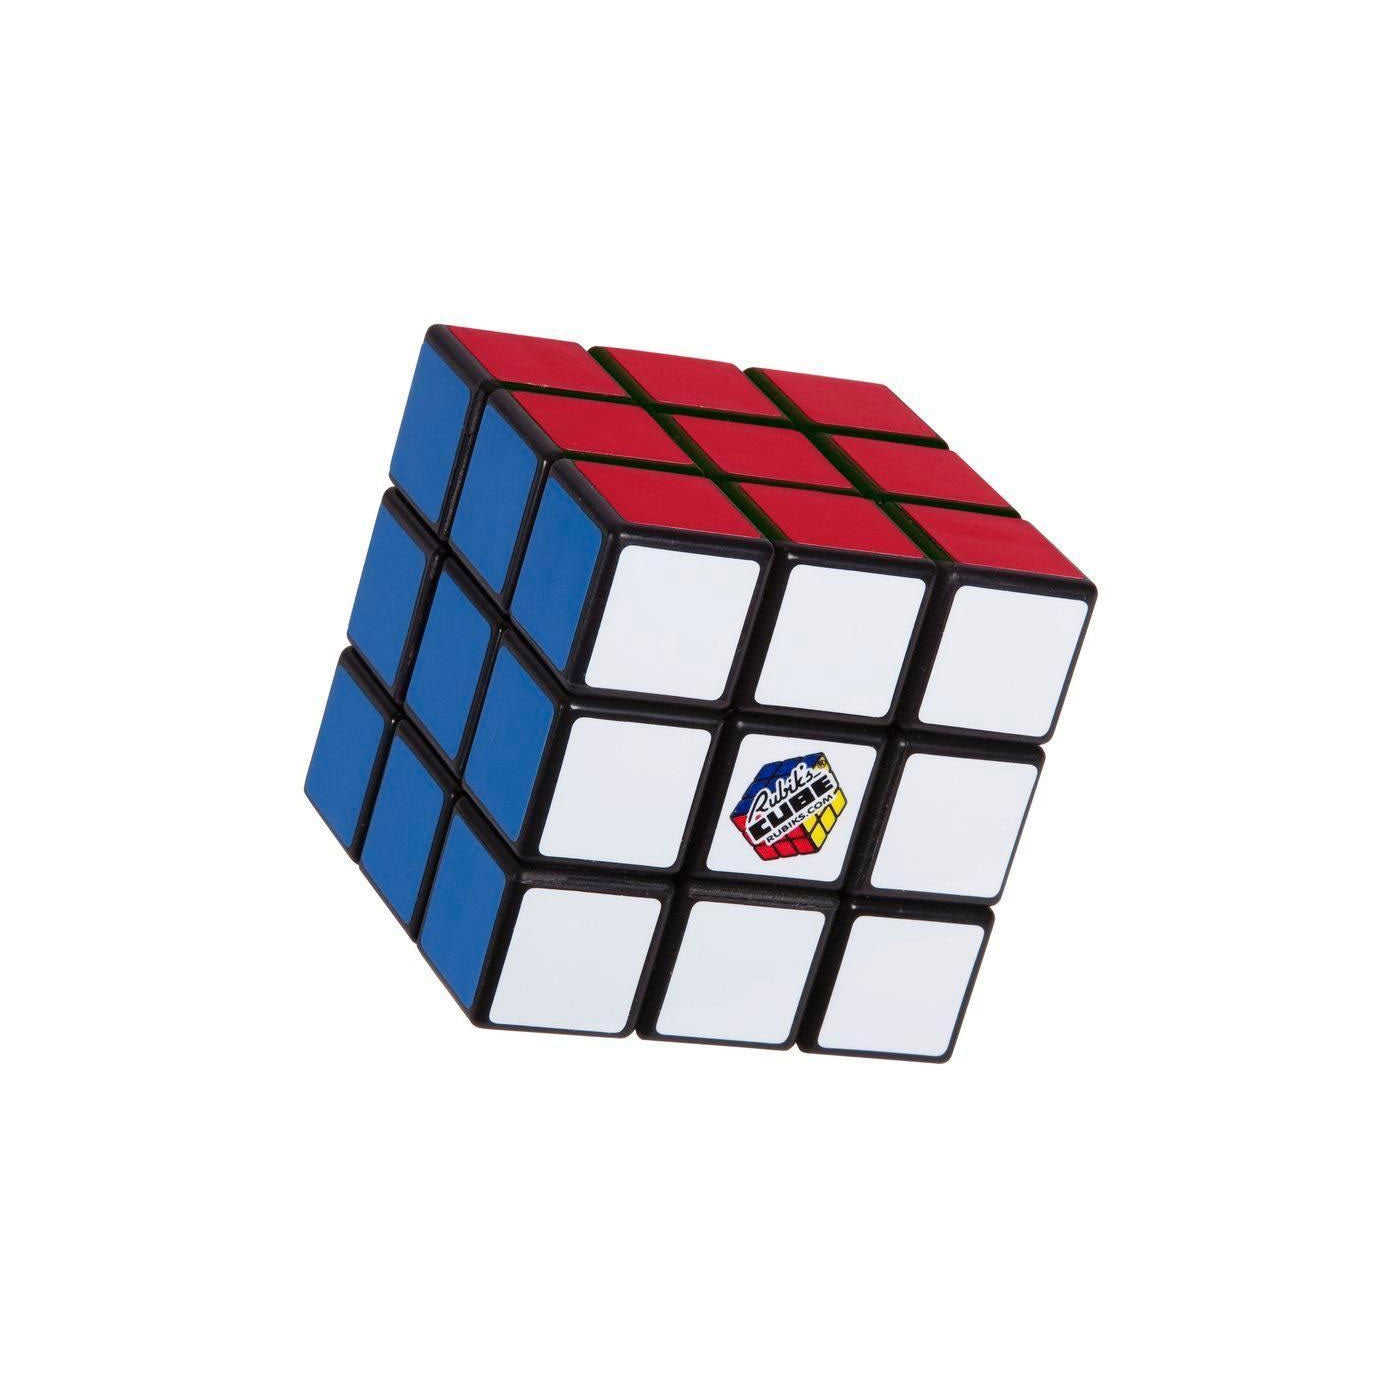 Rubiks terning, original